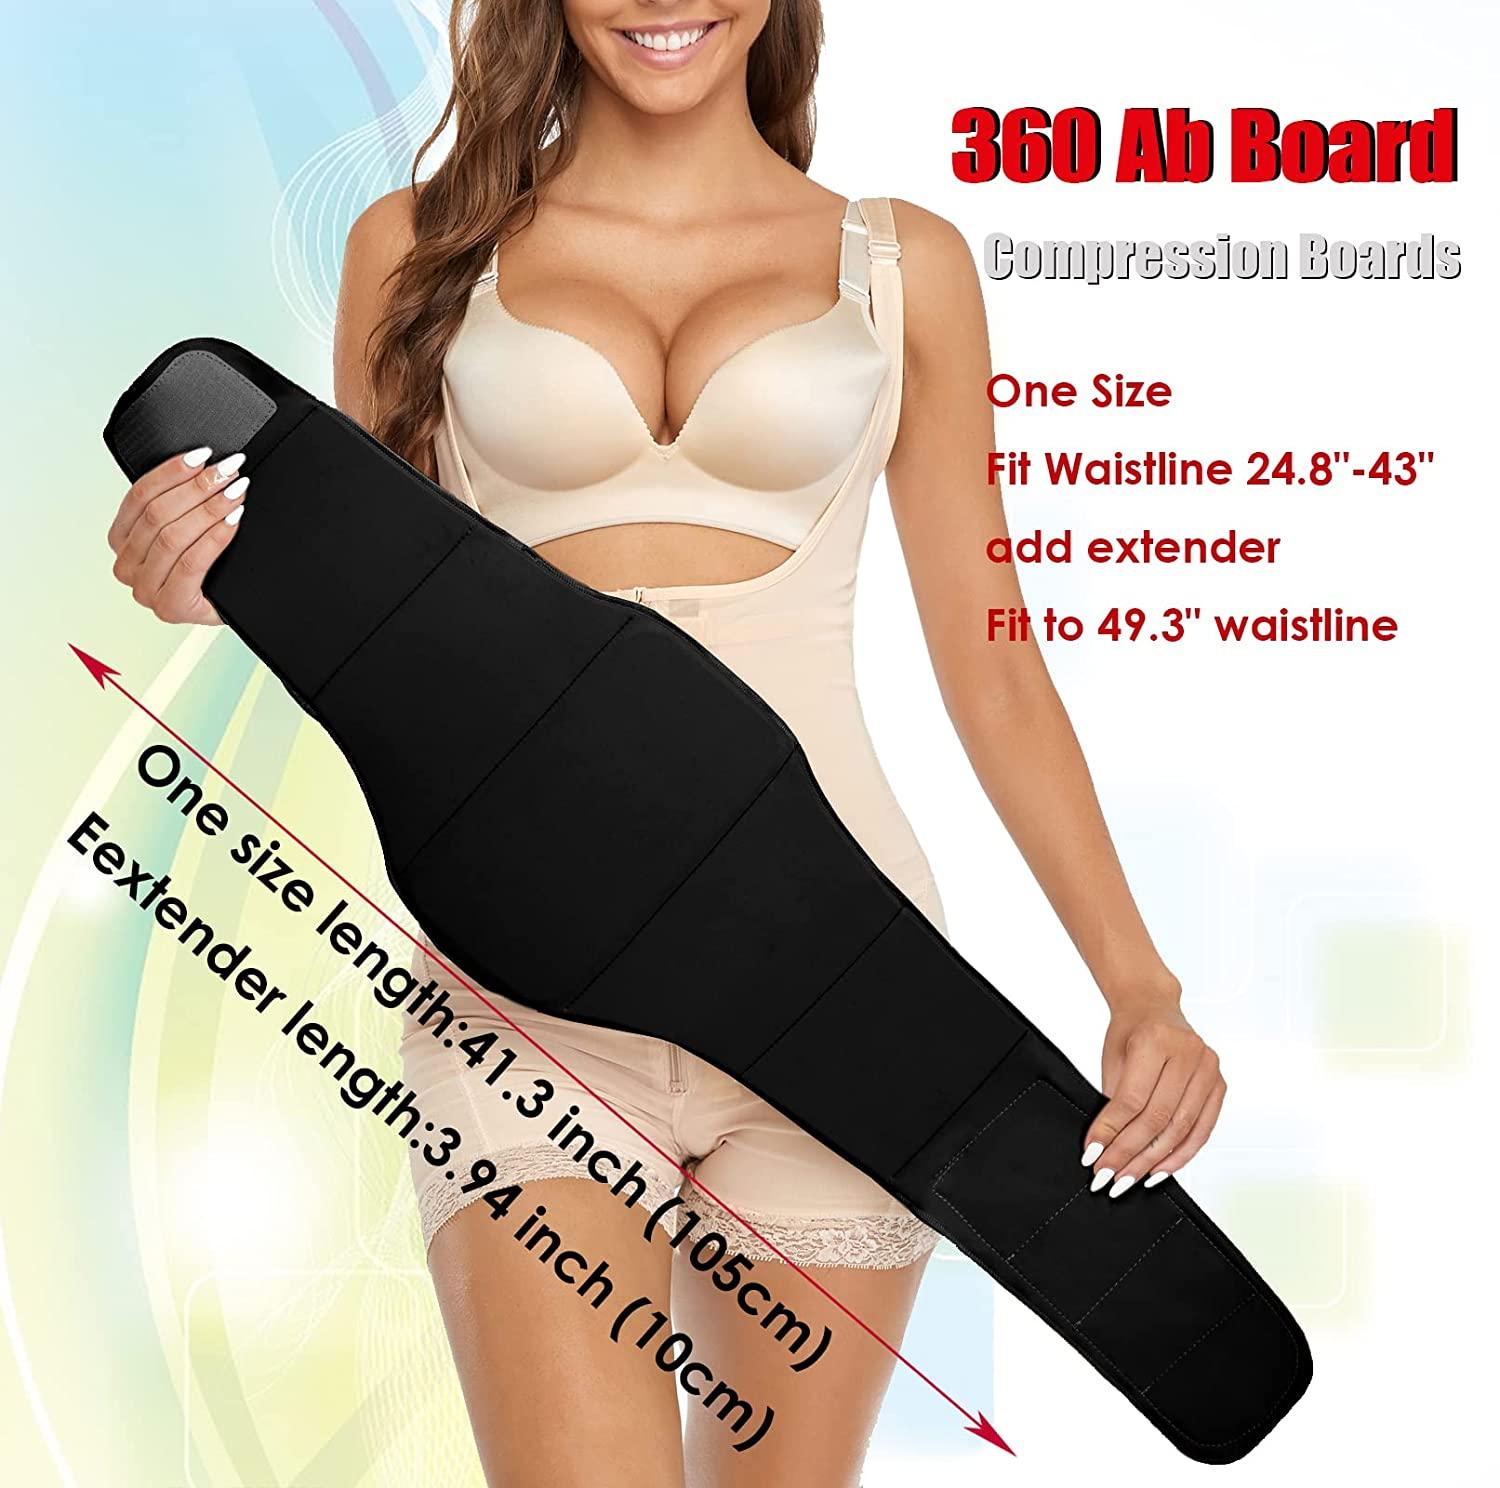 Tabla Abdominal 360 Ab Board Post Surgery Lipo Foam and Compression Boards  for Liposuction, Black one size